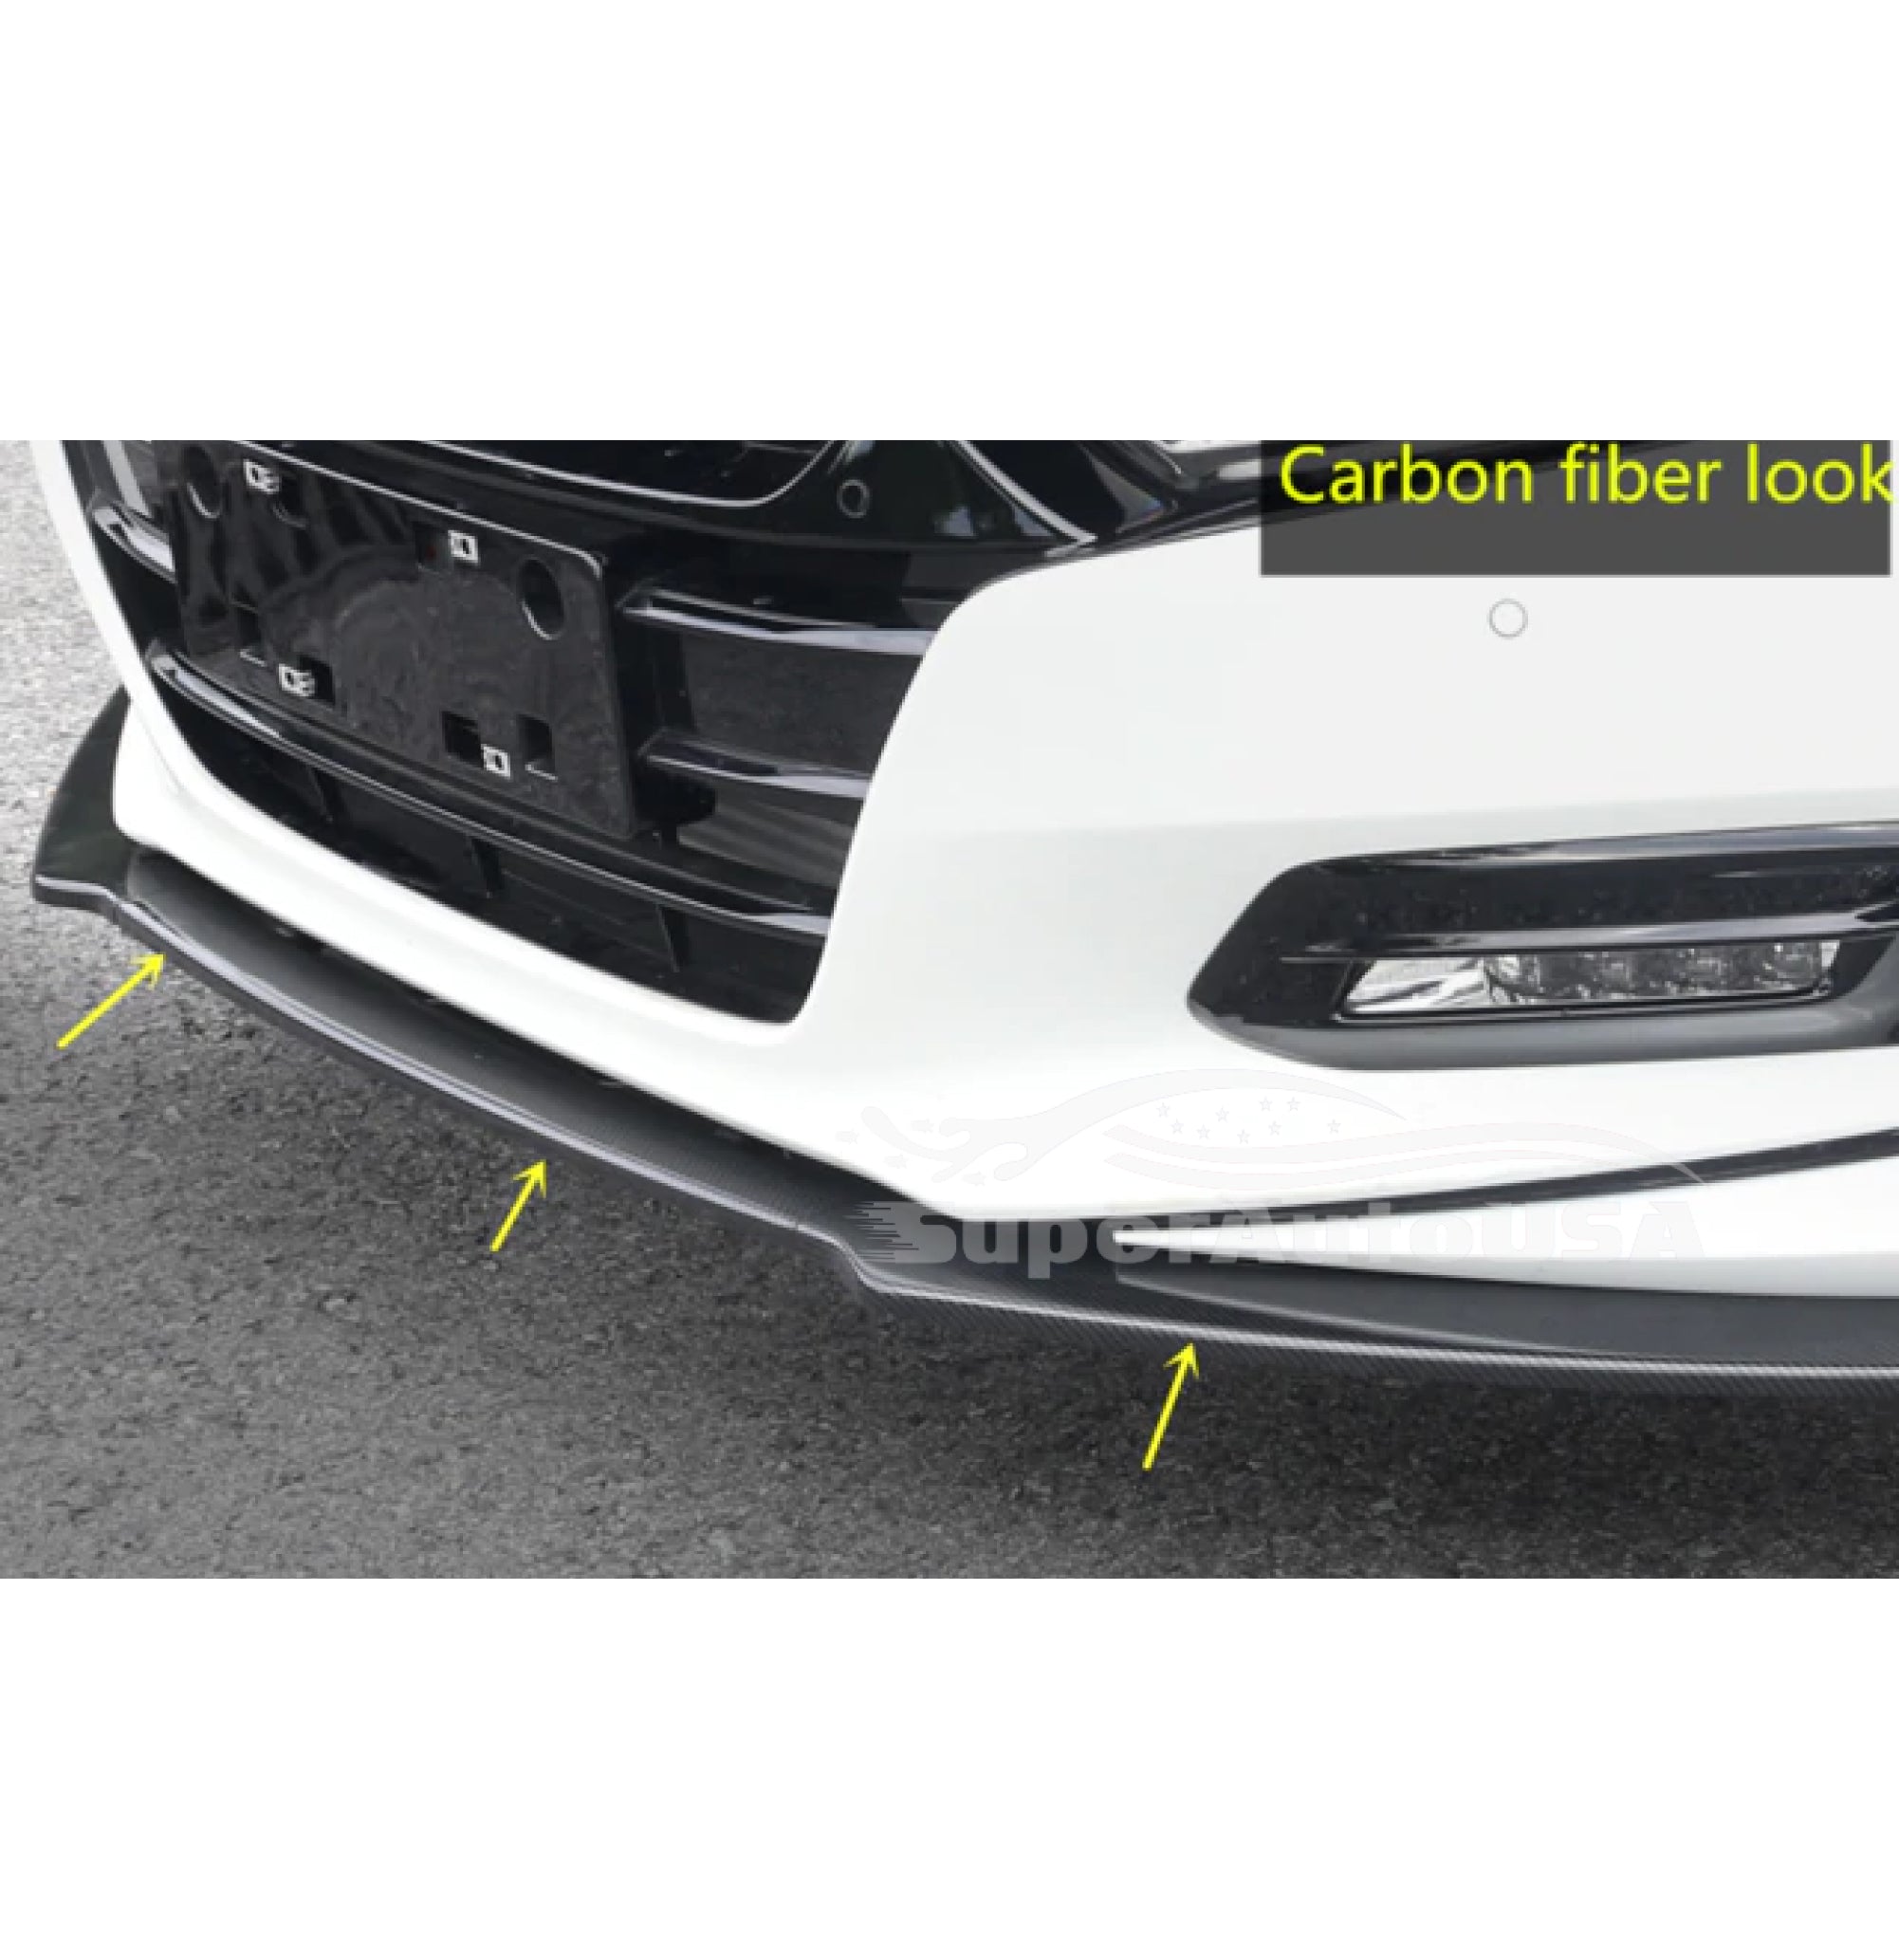 Fit 2018-2020 Honda Accord 4Dr Sedan Front Bumper Lip Spoiler (Carbon Fiber Print)